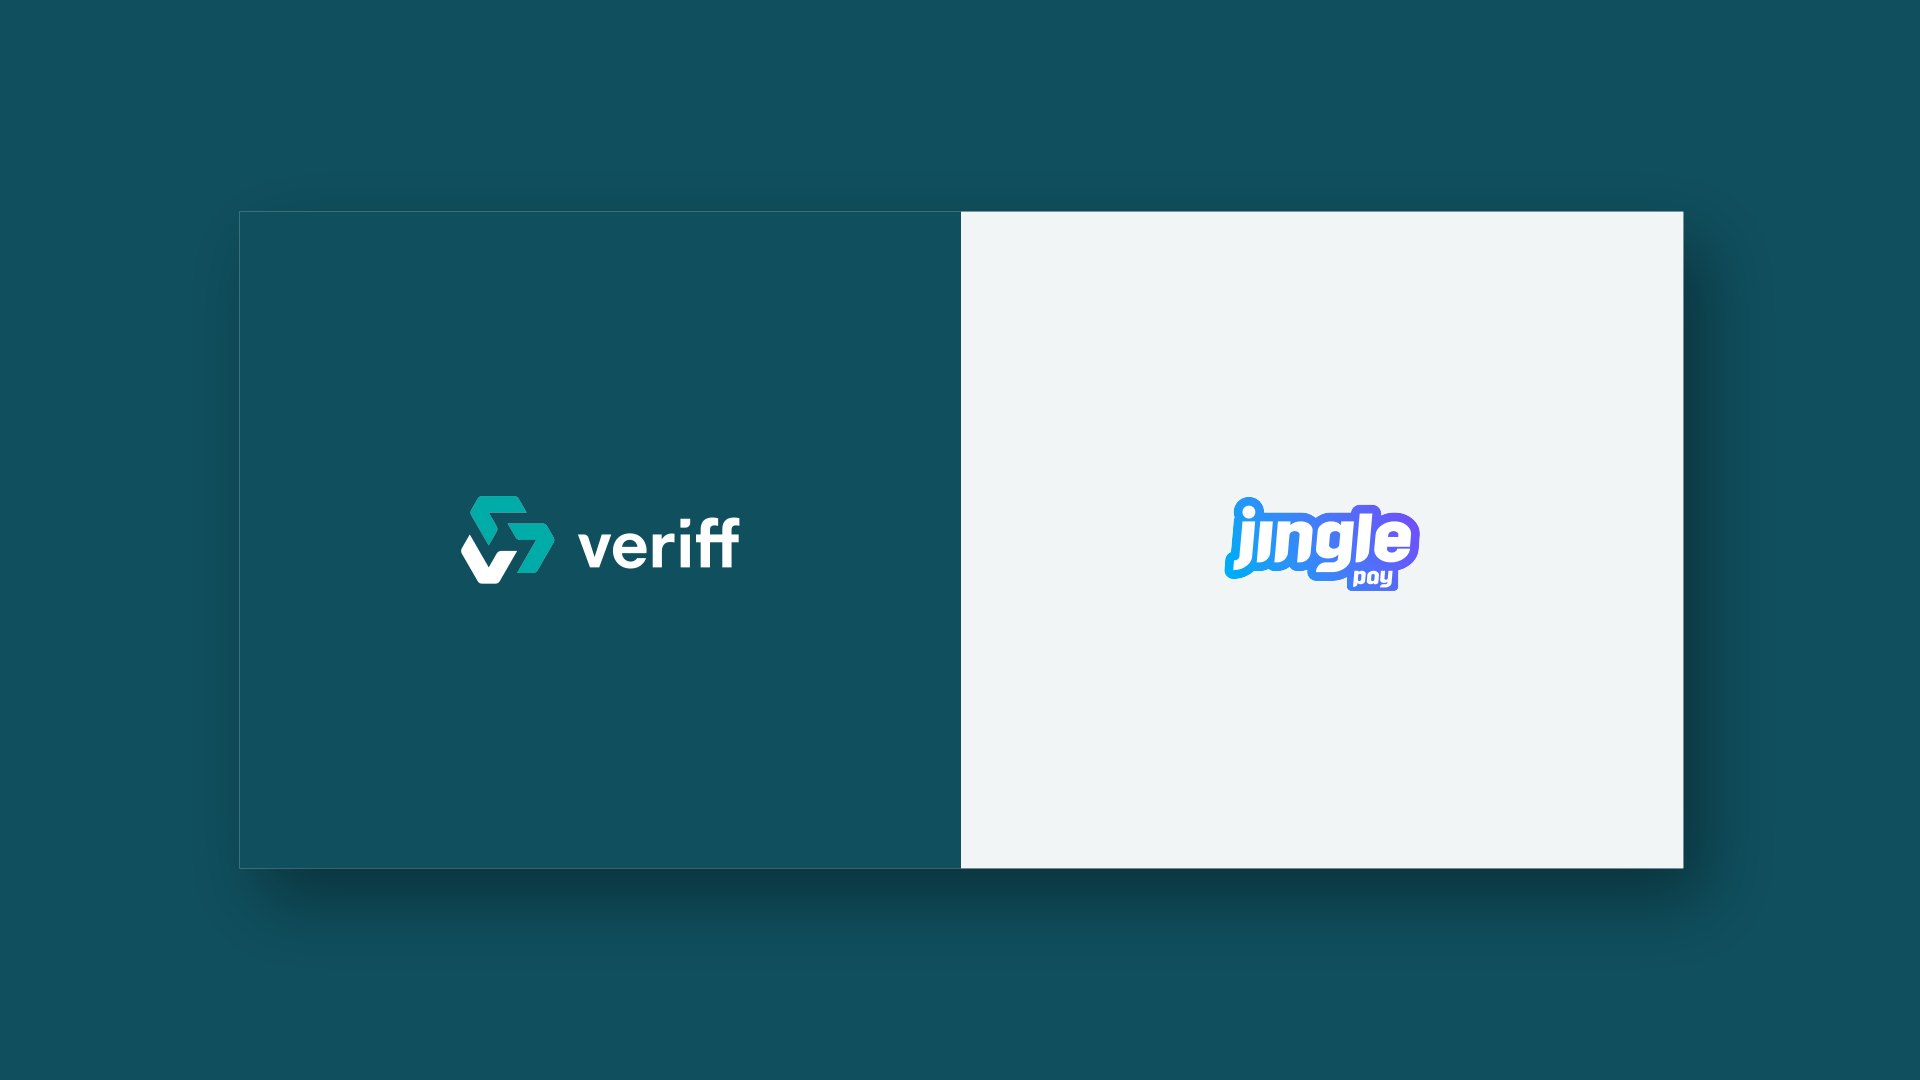 Veriff and Jingle Pay logos.